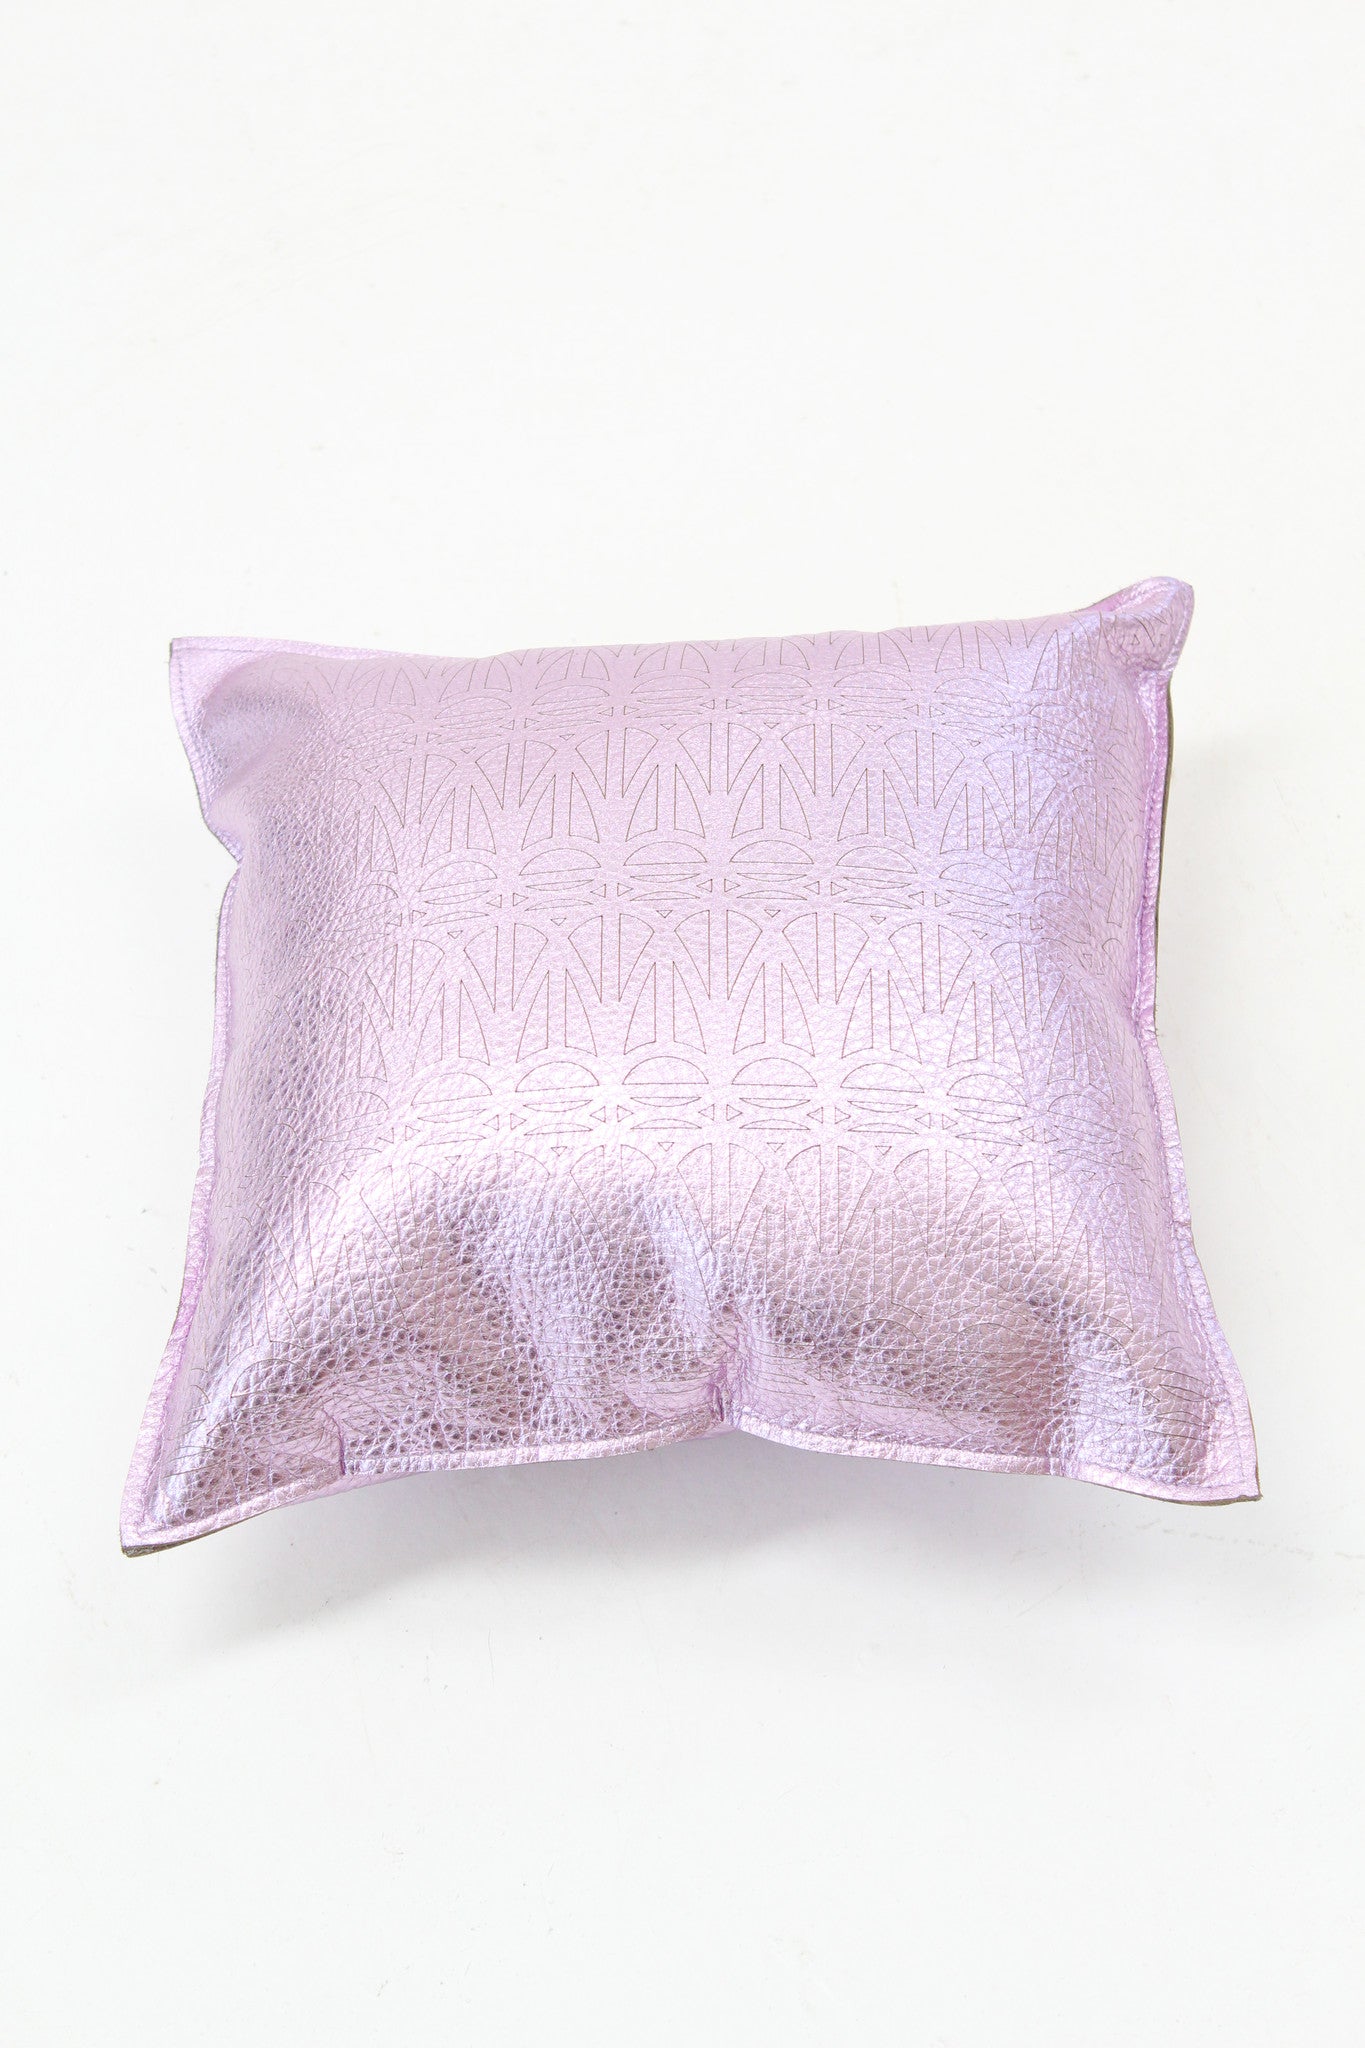 Beklina Metallic Lavender Pillow Corwin